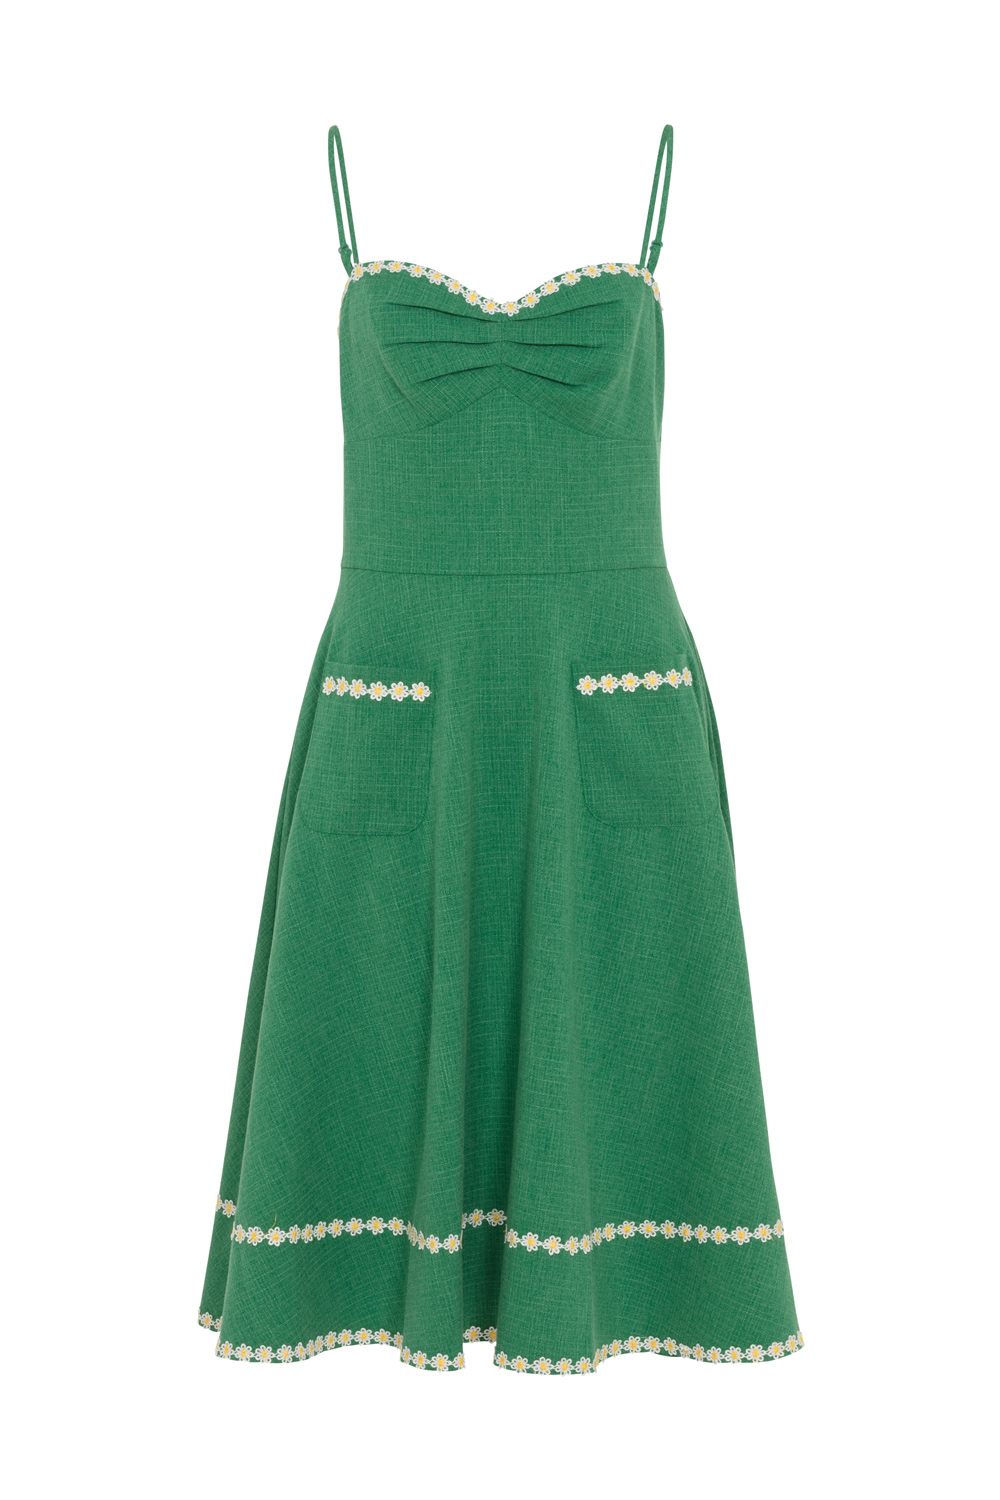 Deliliah Green Flared Dress